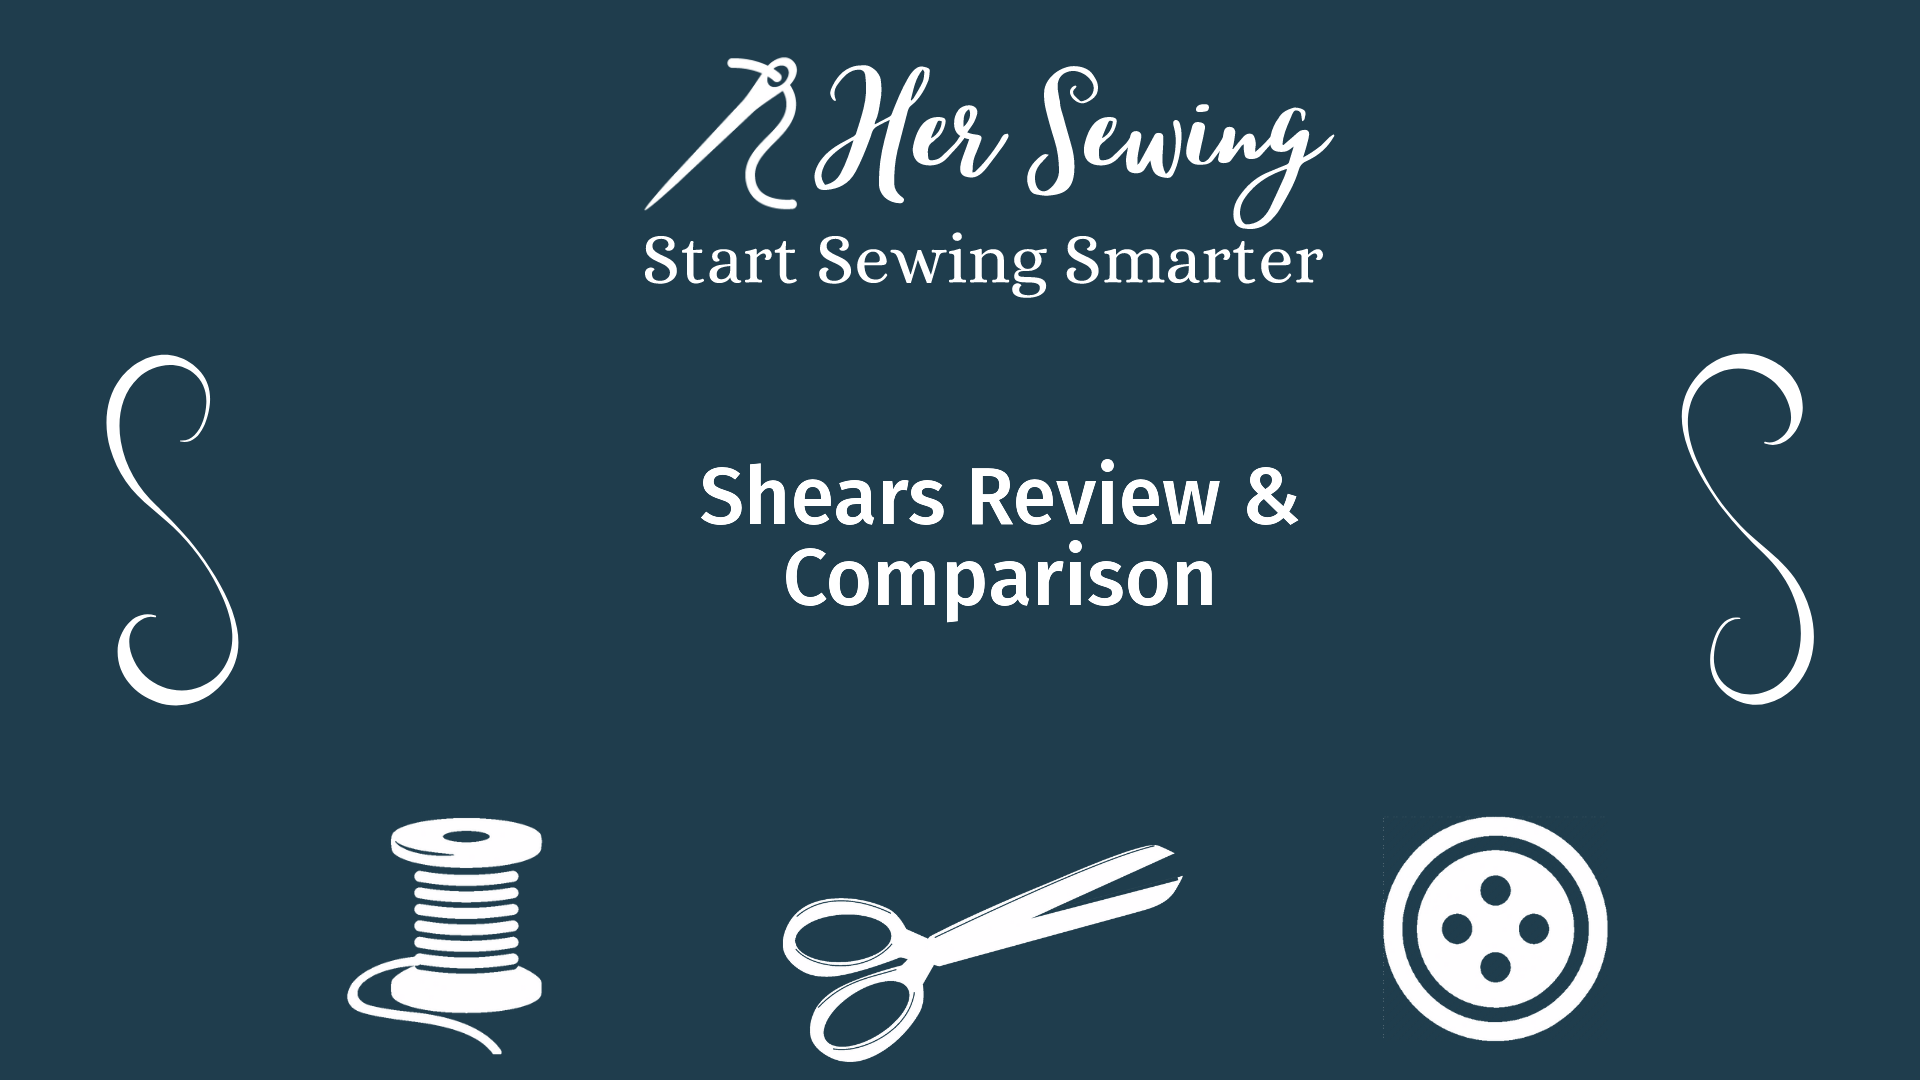 Shears Review & Comparison